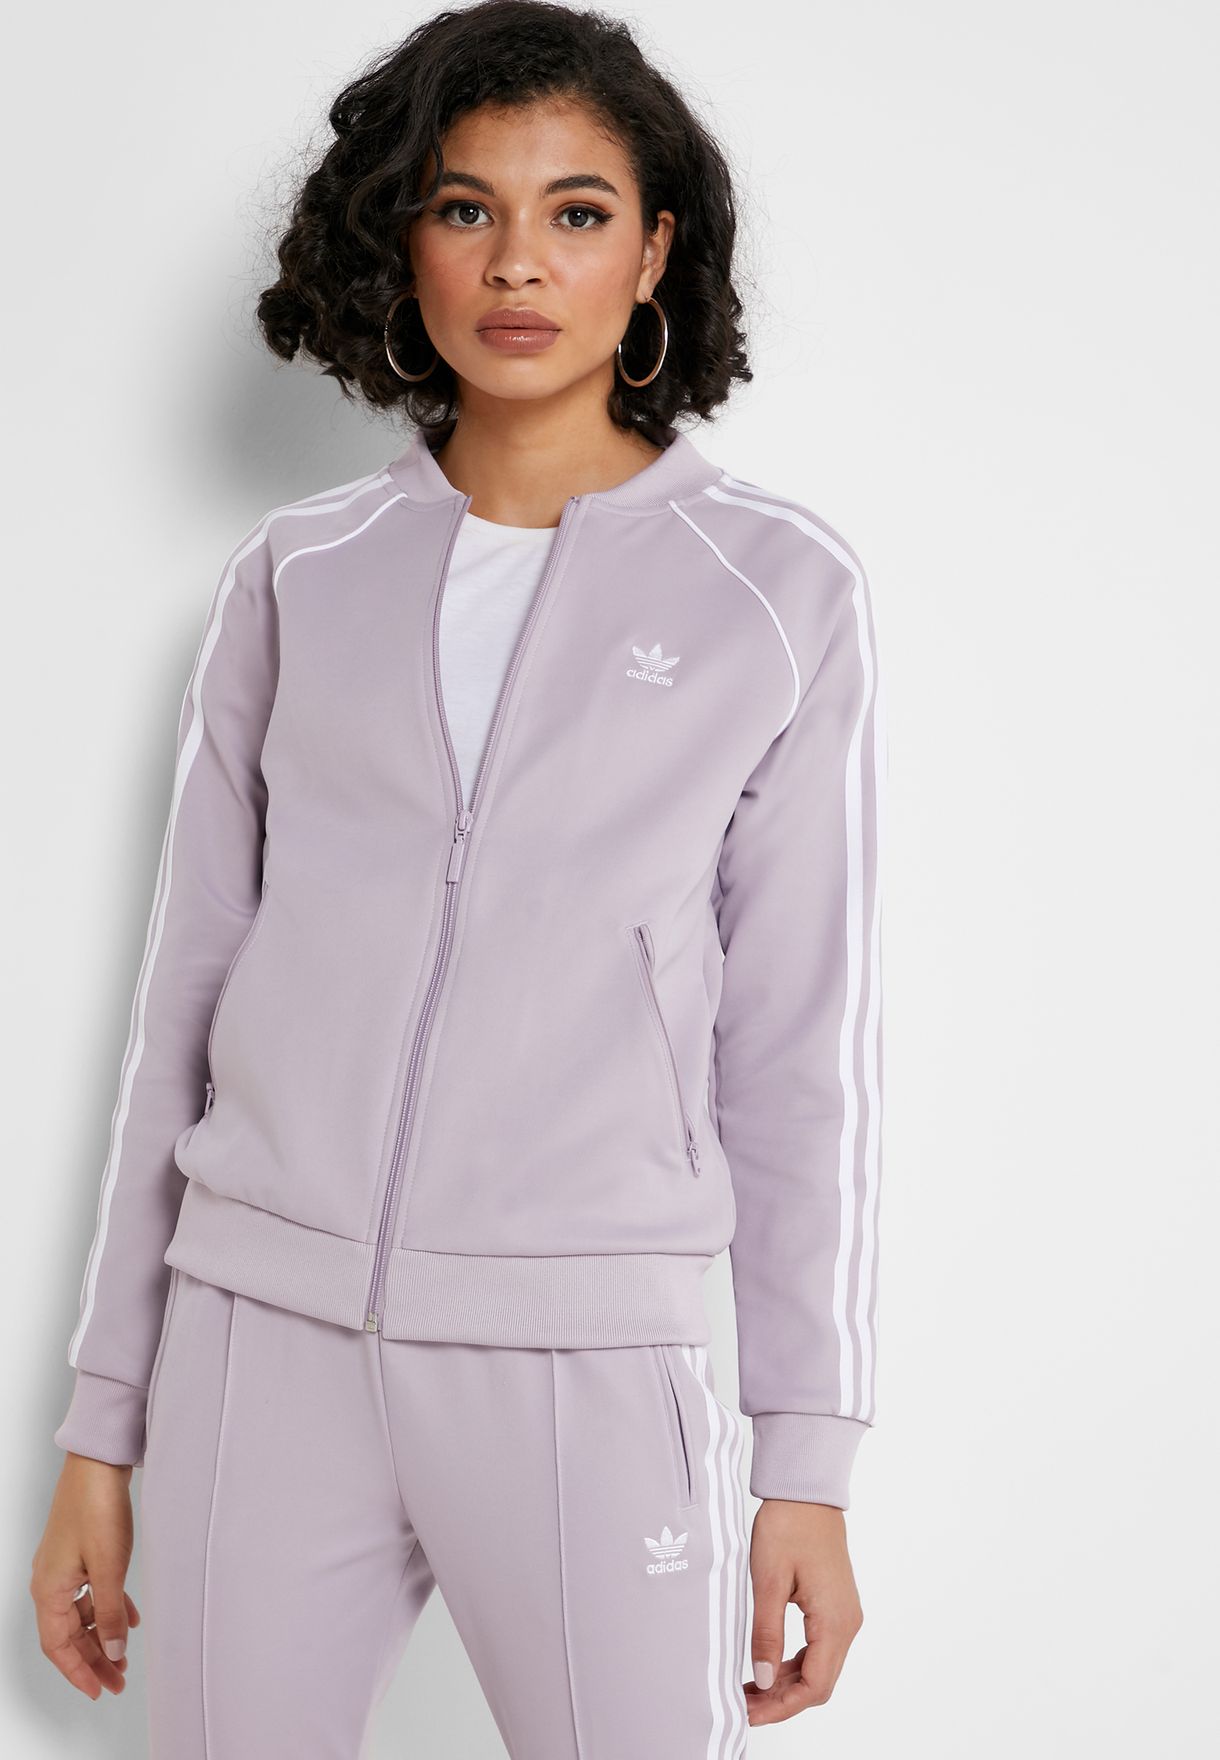 adidas jacket women purple